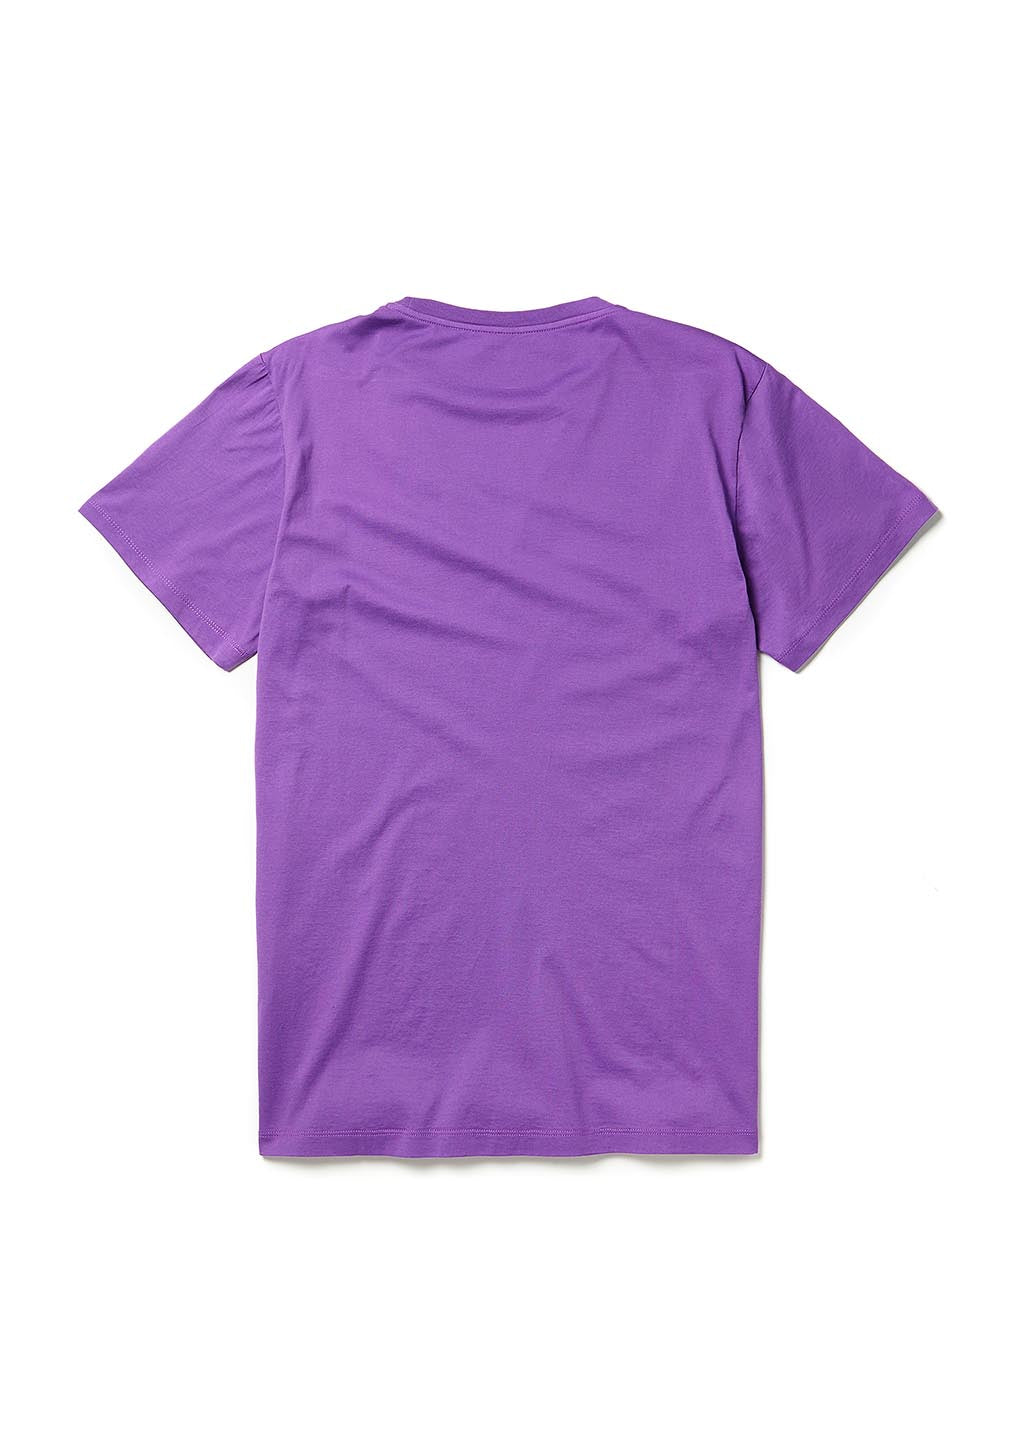 Classic T-Shirt in Purple